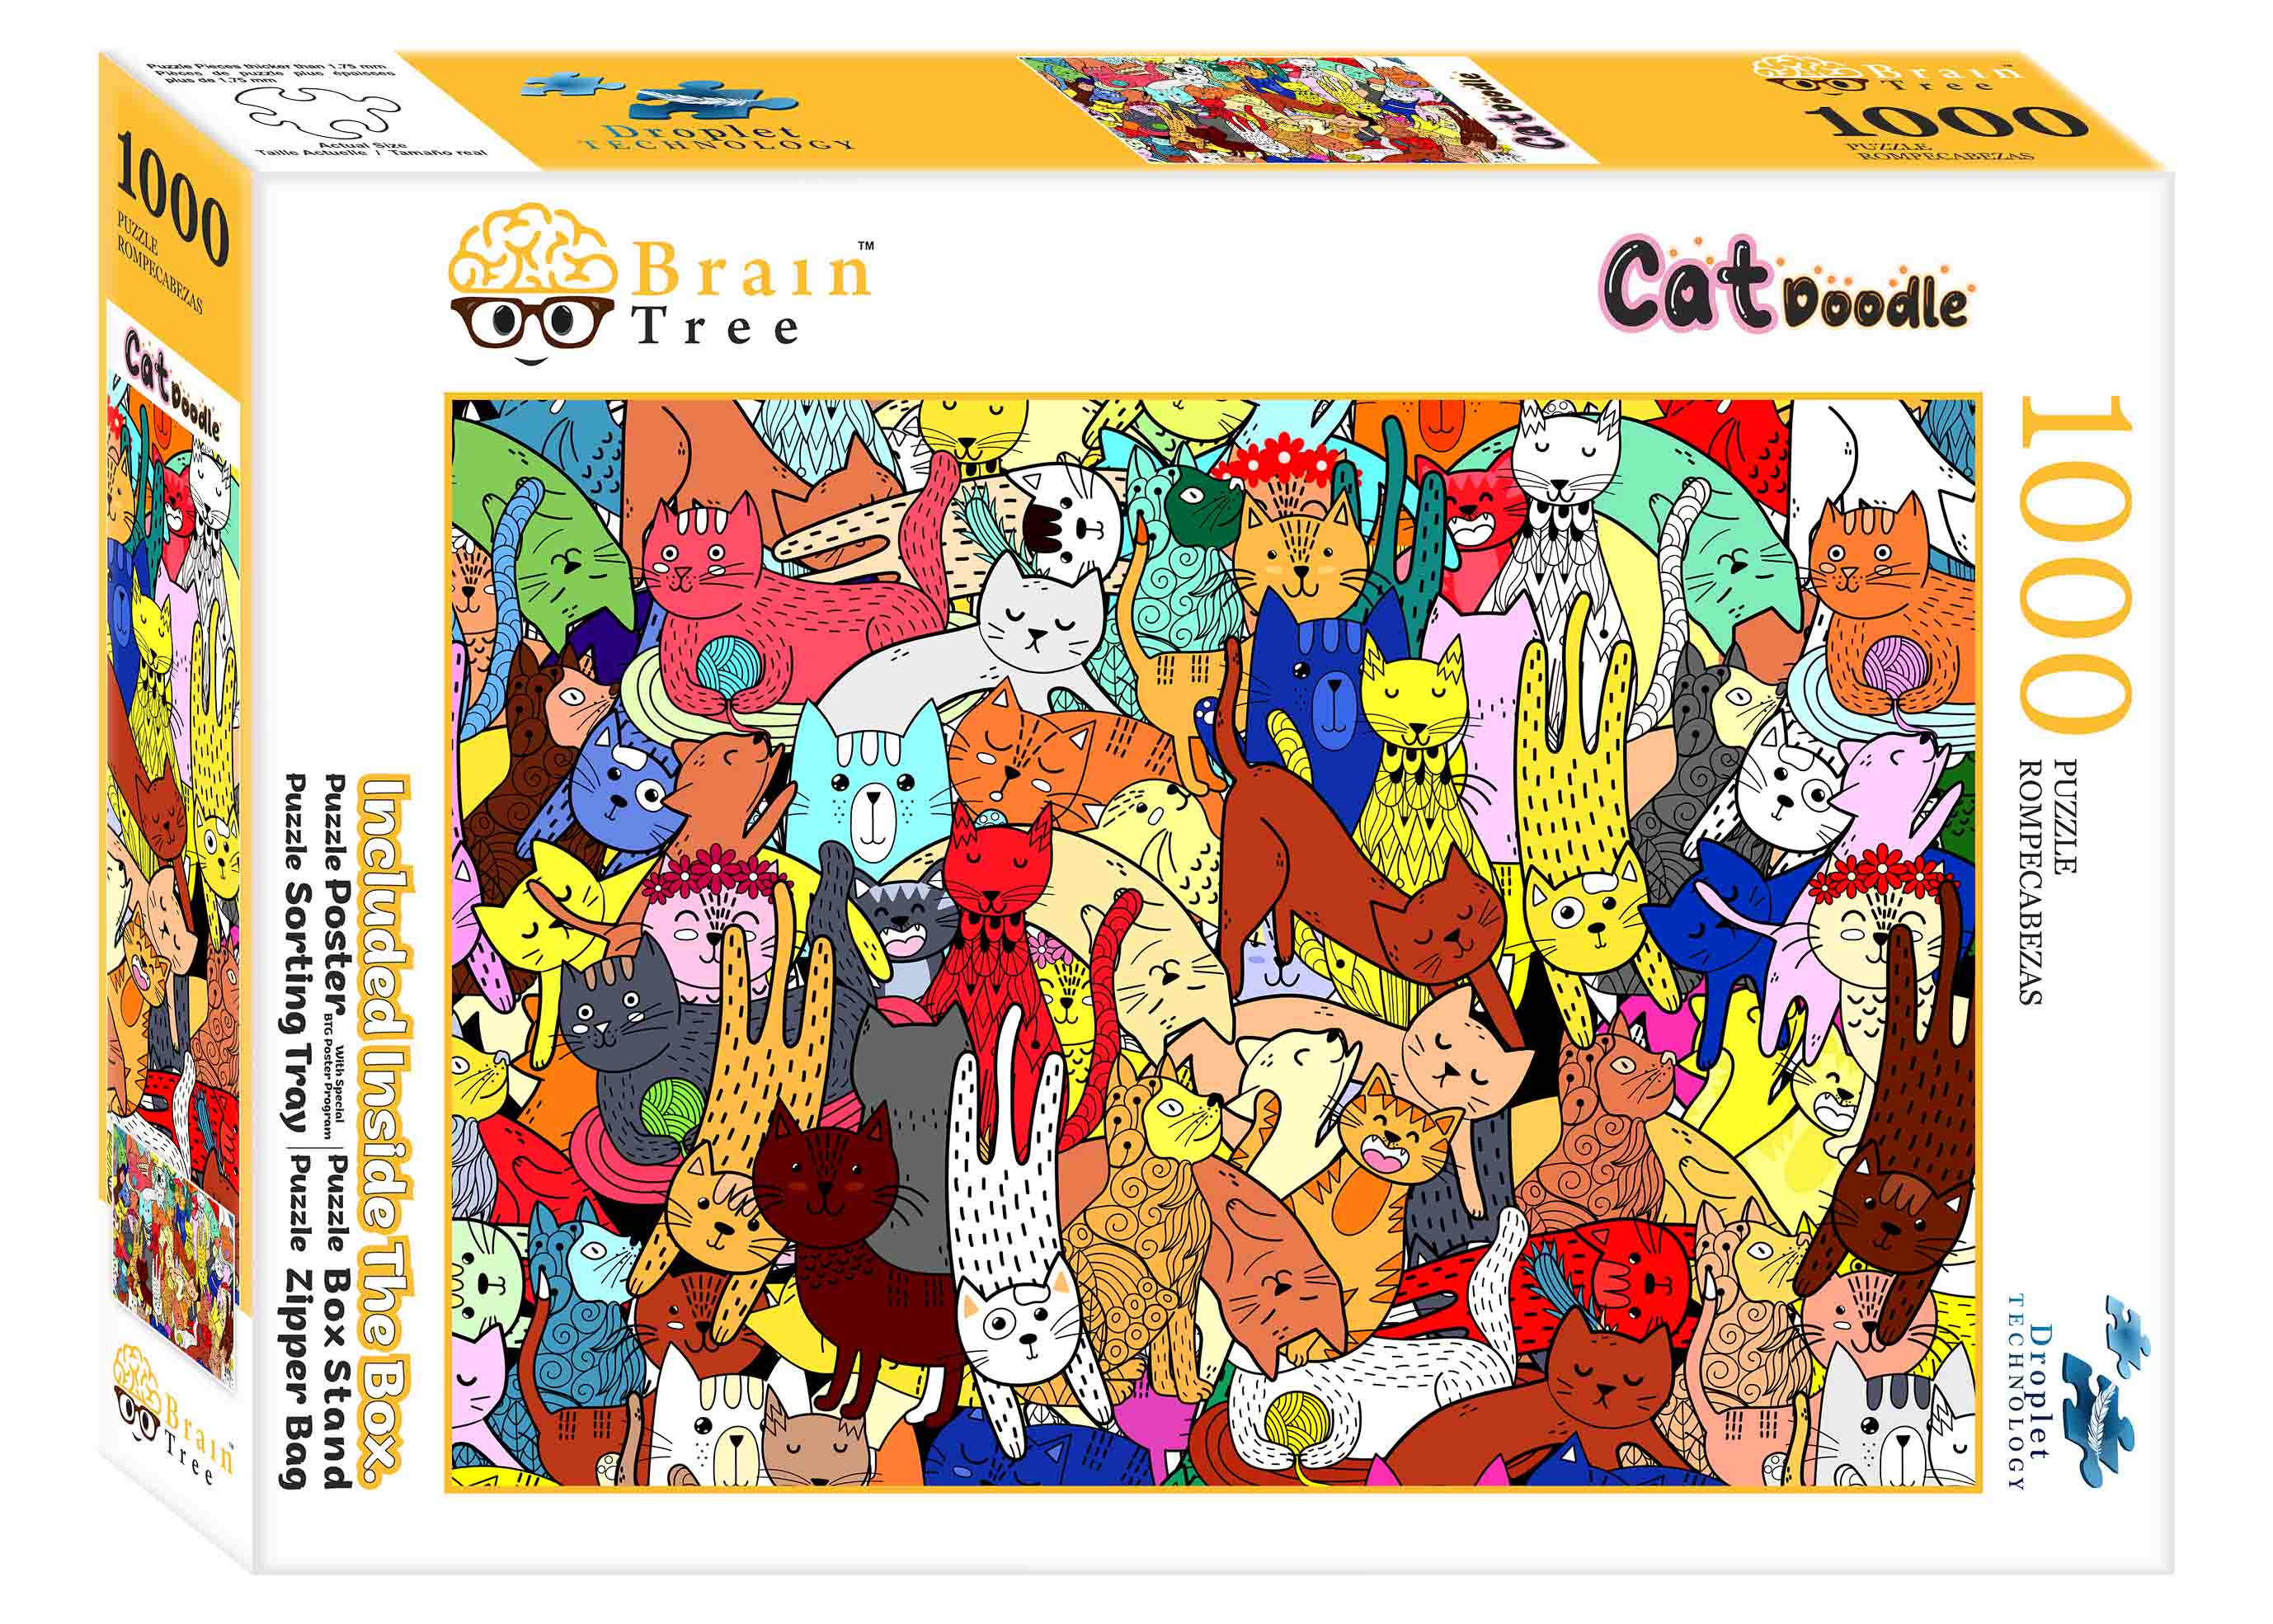 Cat doodle Jigsaw Puzzles 1000 Piece Brain Tree Games